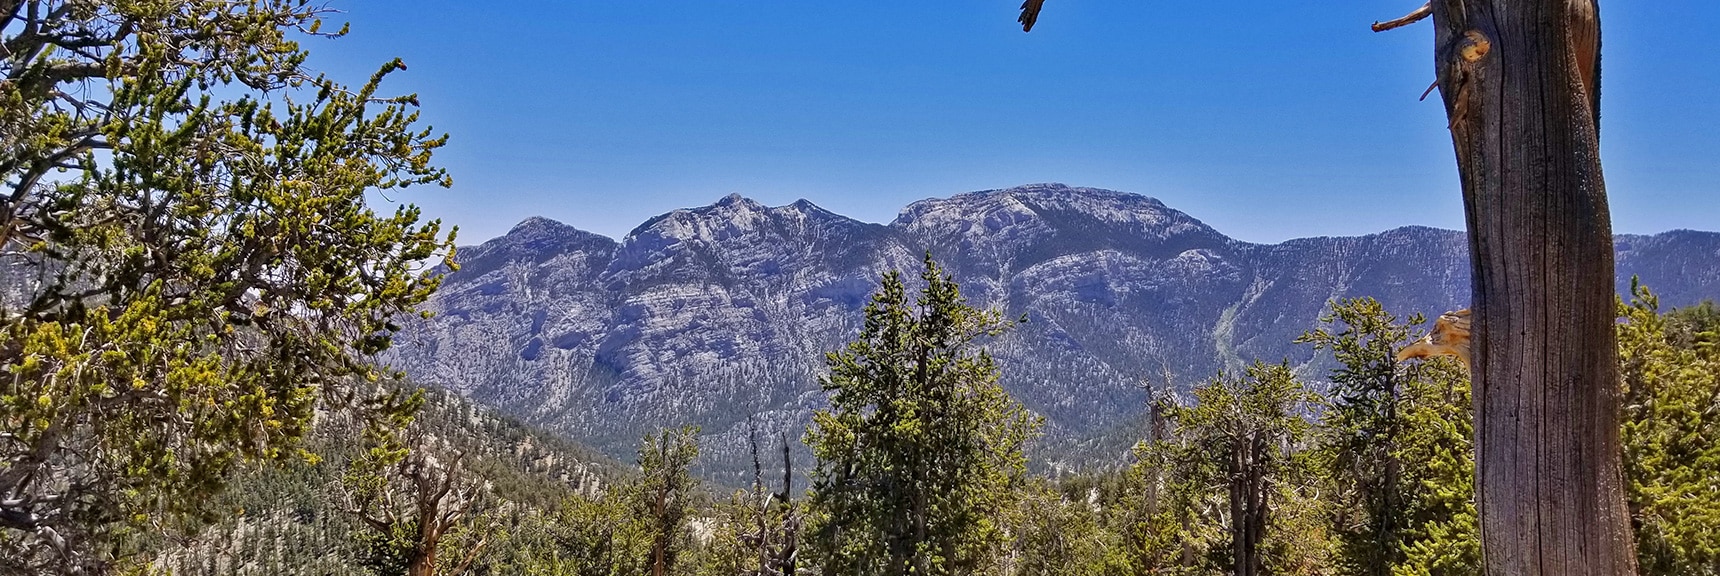 Mummy Mountain Viewed from Bonanza Trail | Base of McFarland Peak via Bristlecone Pine Trail and Bonanza Trail | Lee Canyon | Spring Mountains, Nevada